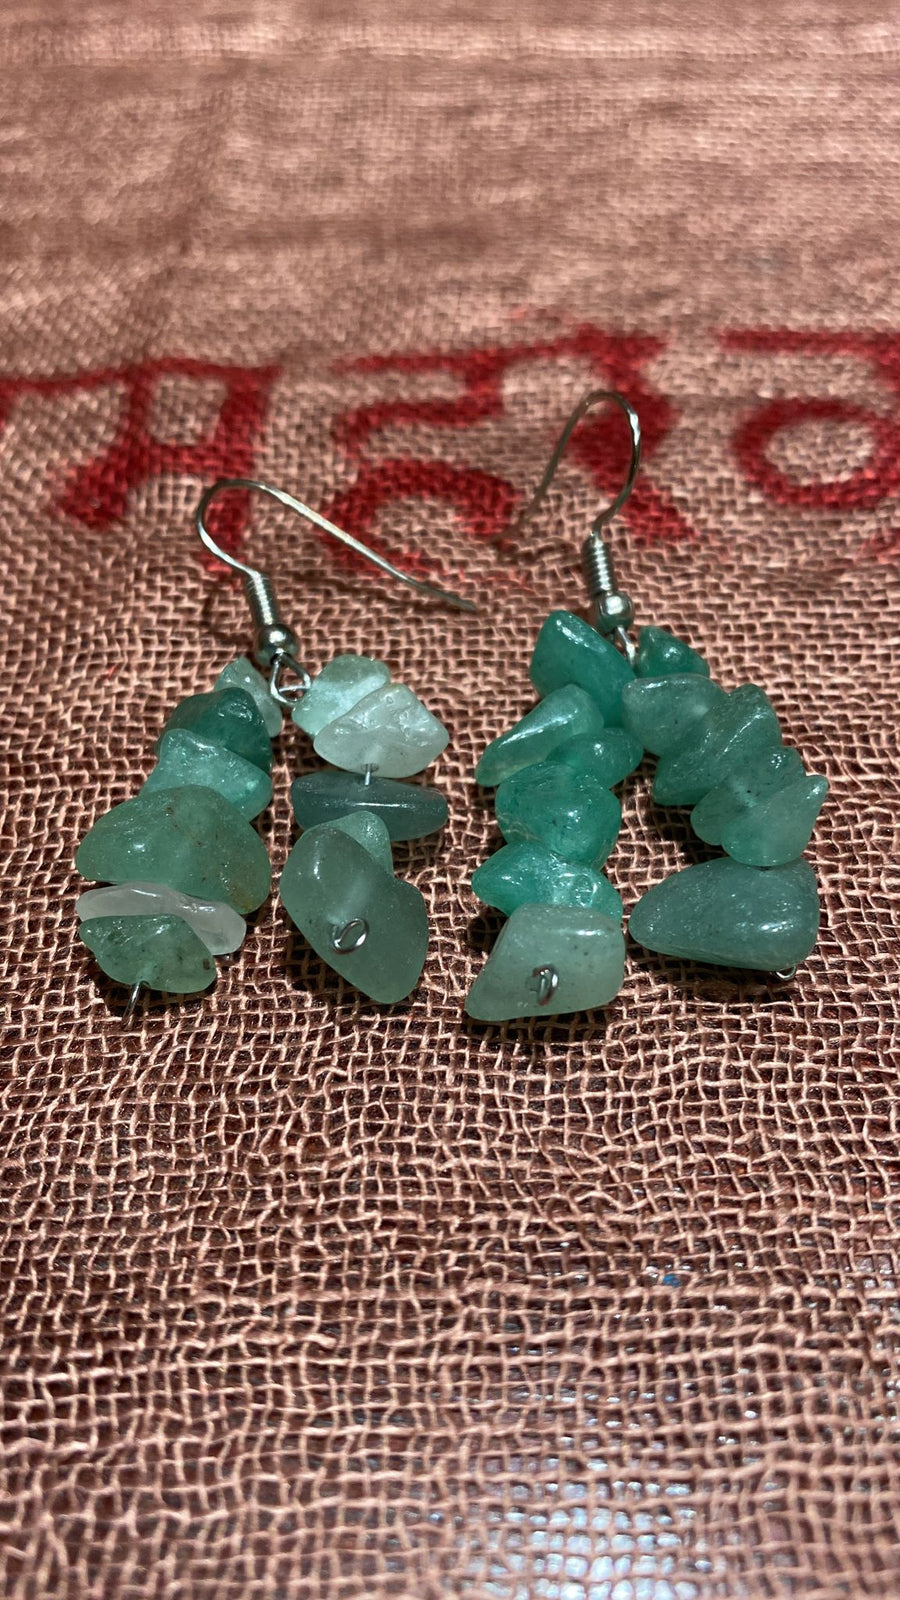 green aventurine earrings